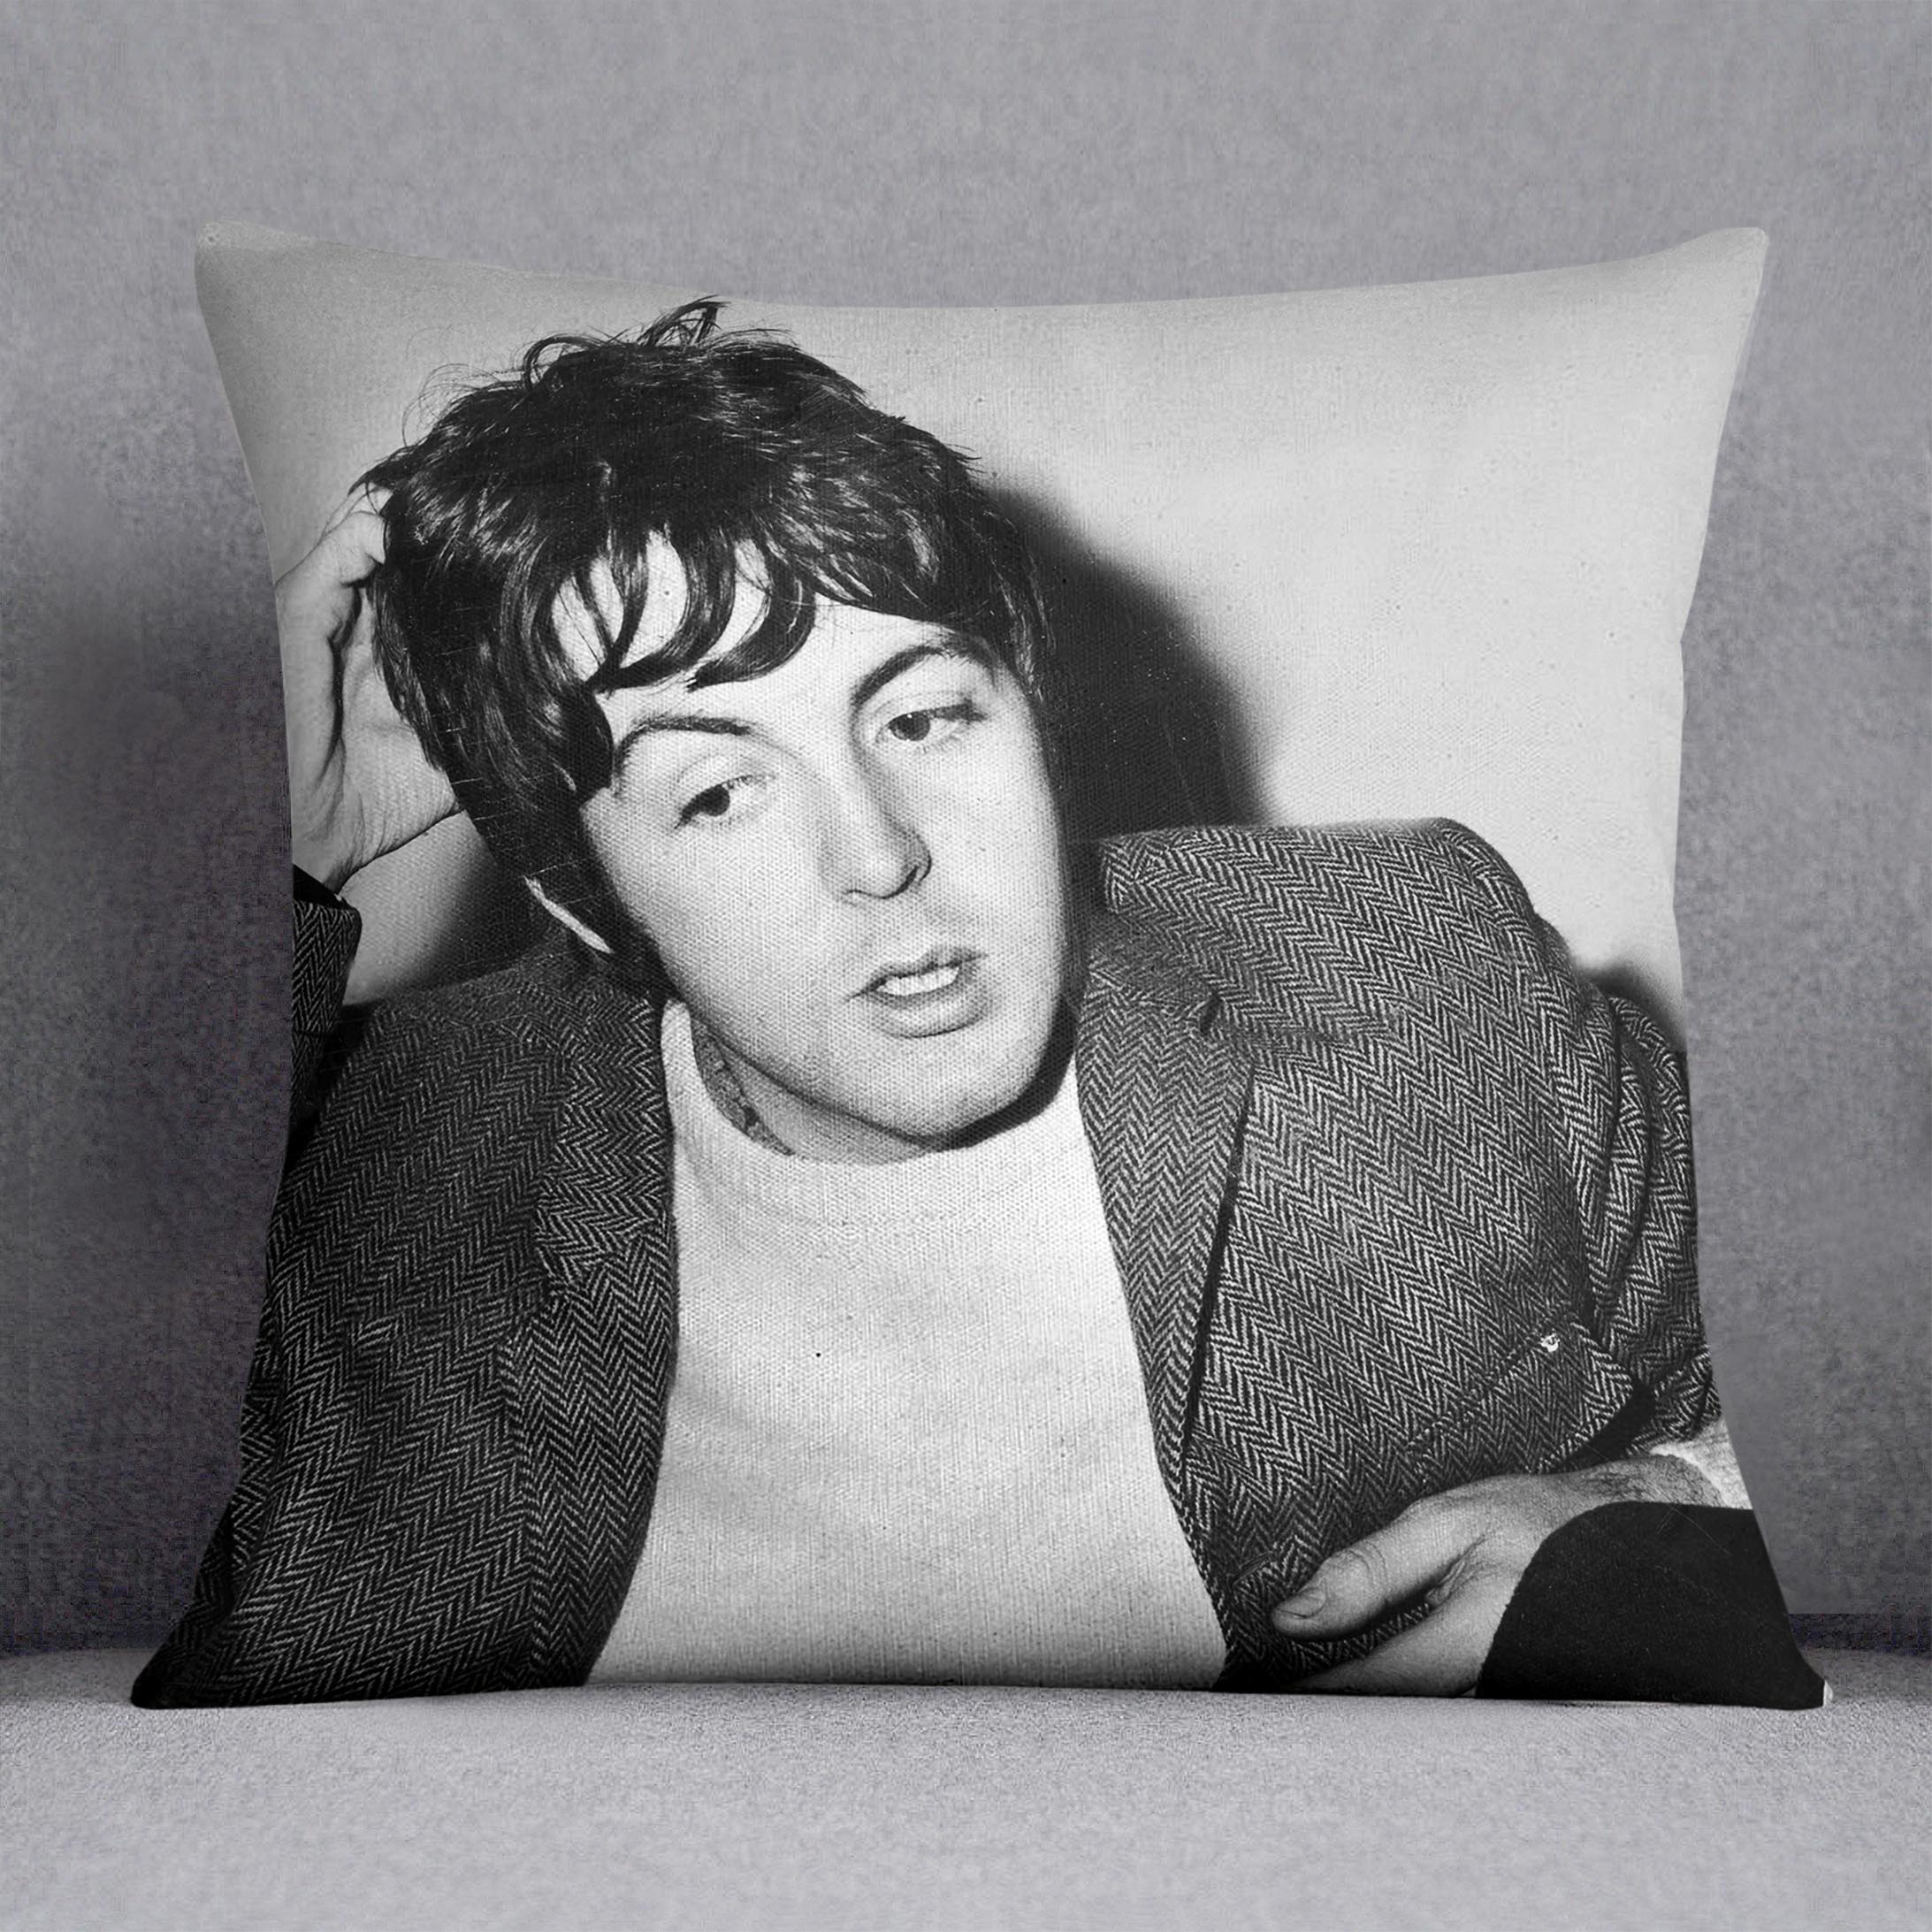 Paul McCartney being interviewed Cushion